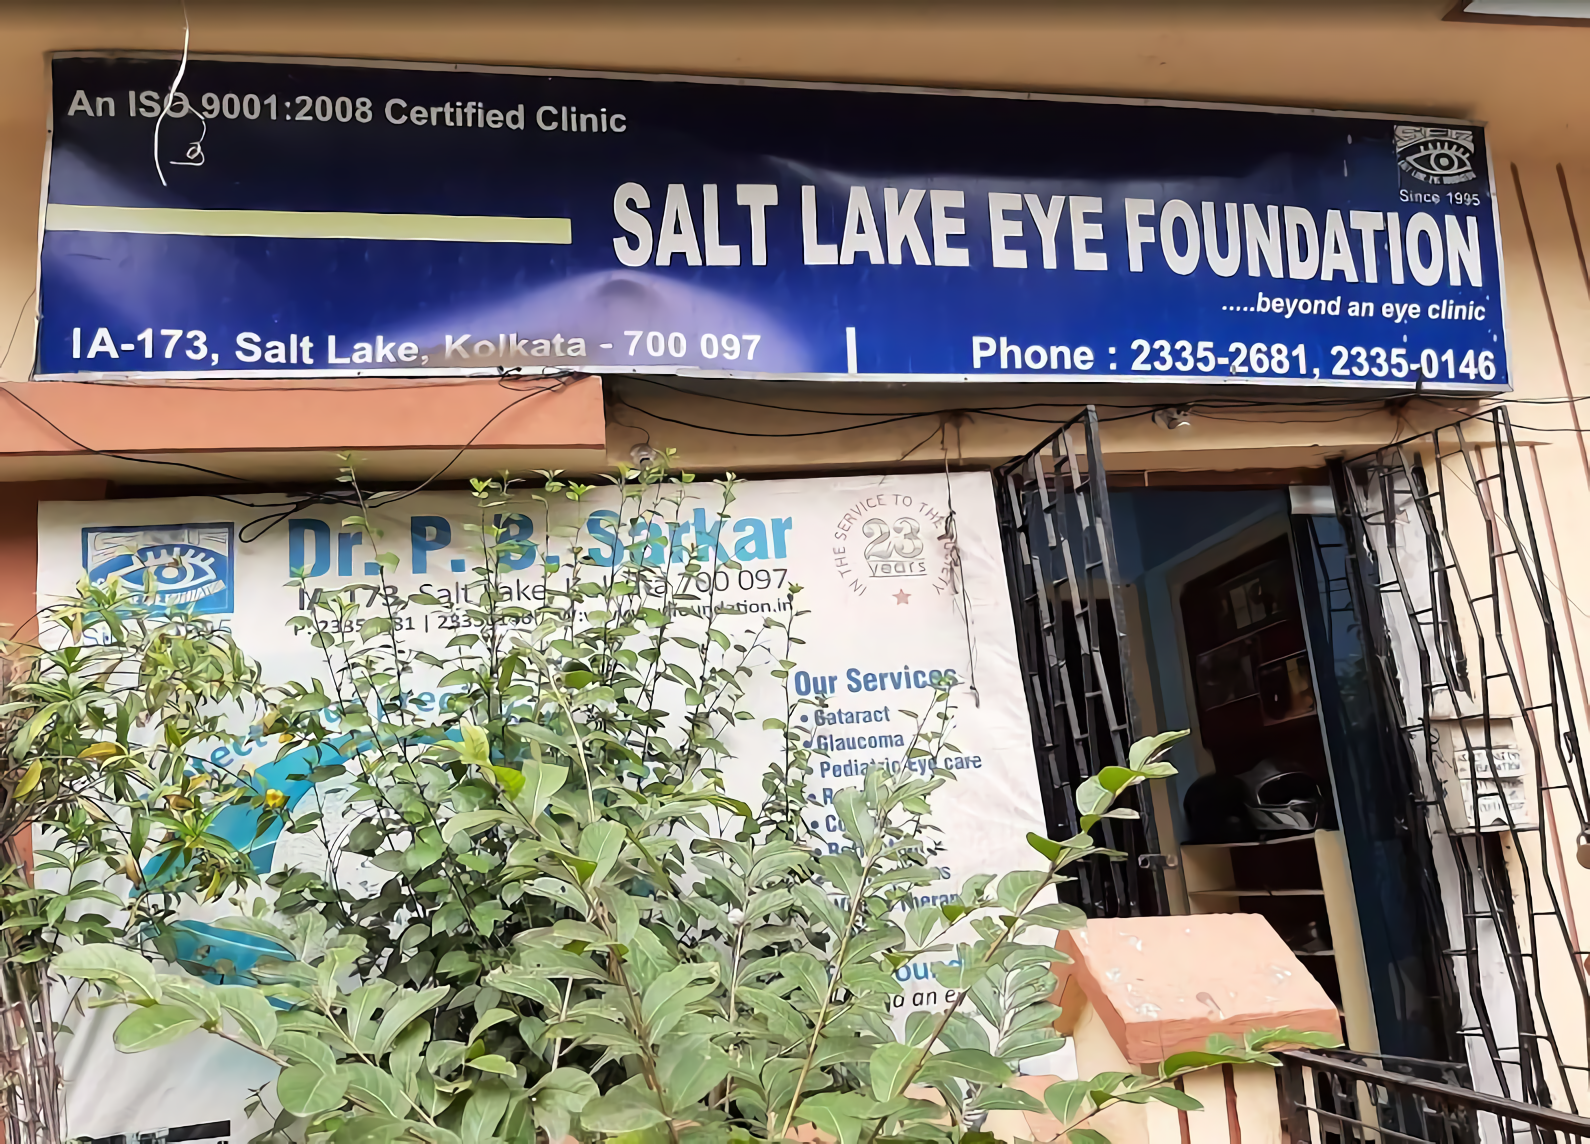 Salt Lake Eye Foundation photo